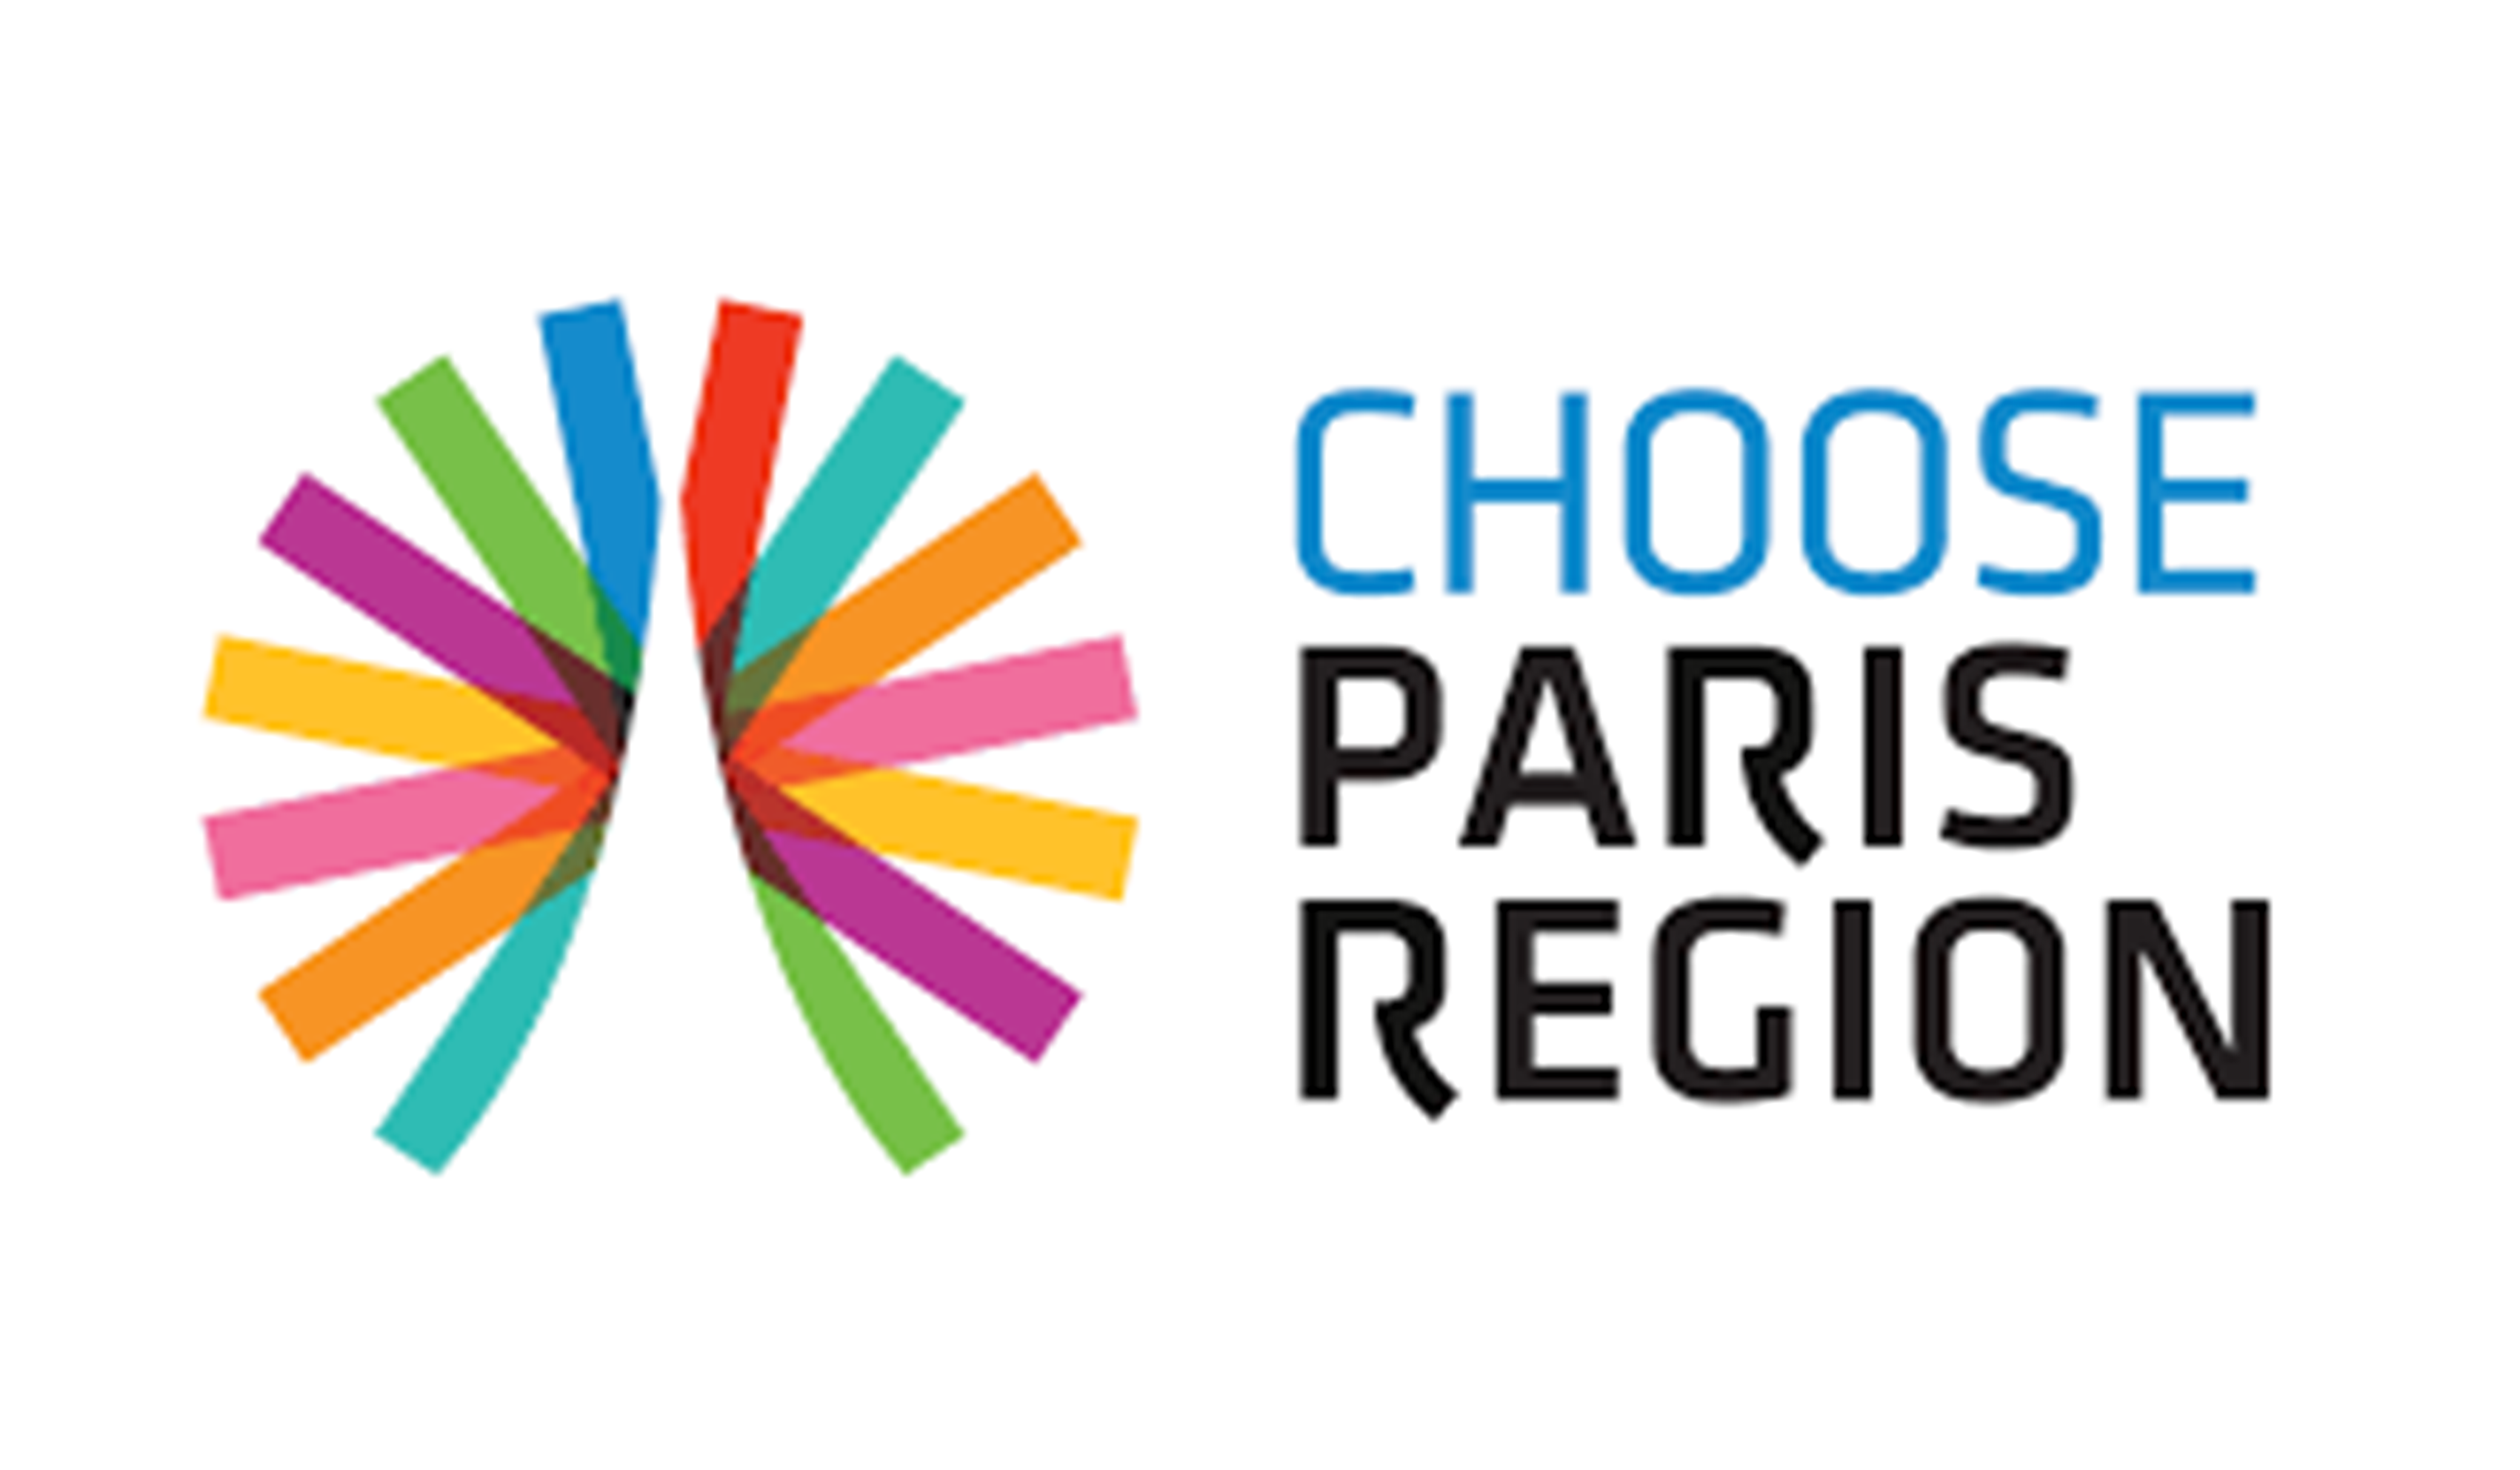 Webinar “Cleantech – Happening now in Paris Region” by Paris Choose Region